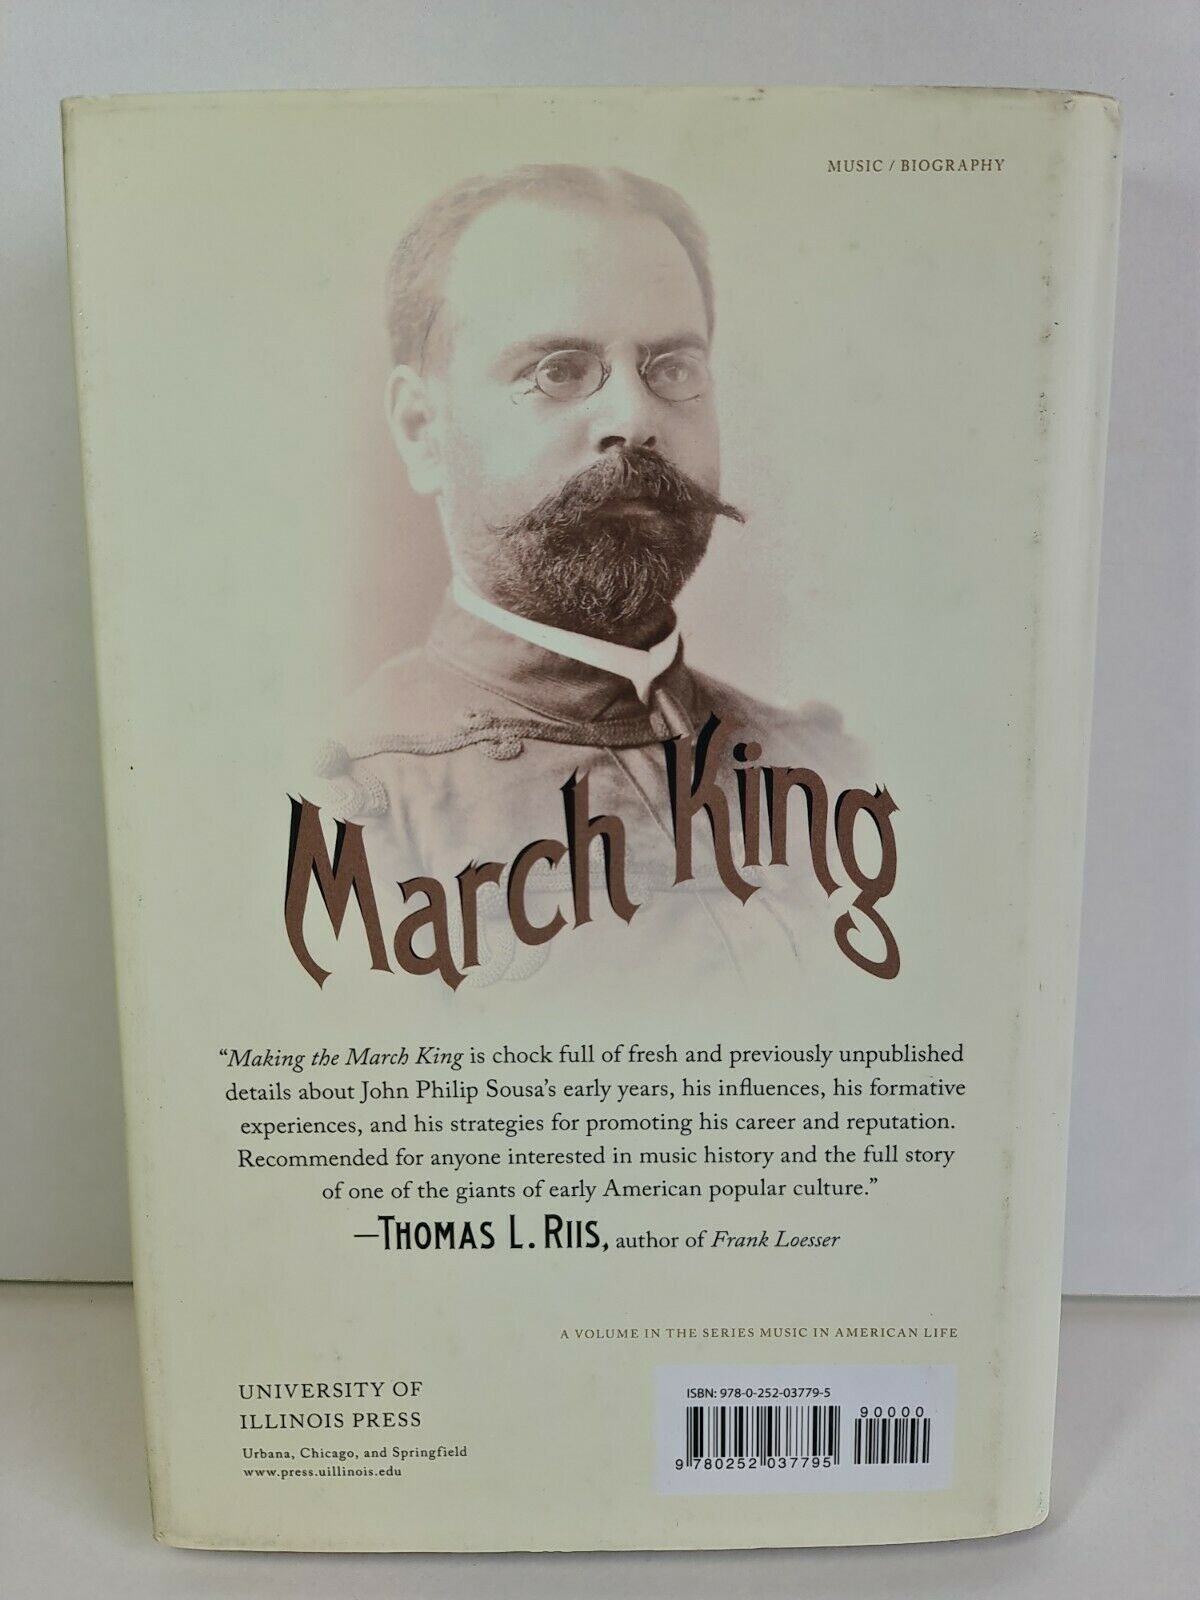 Making the March King: John Philip Sousa's Washington Years, 1854-1893